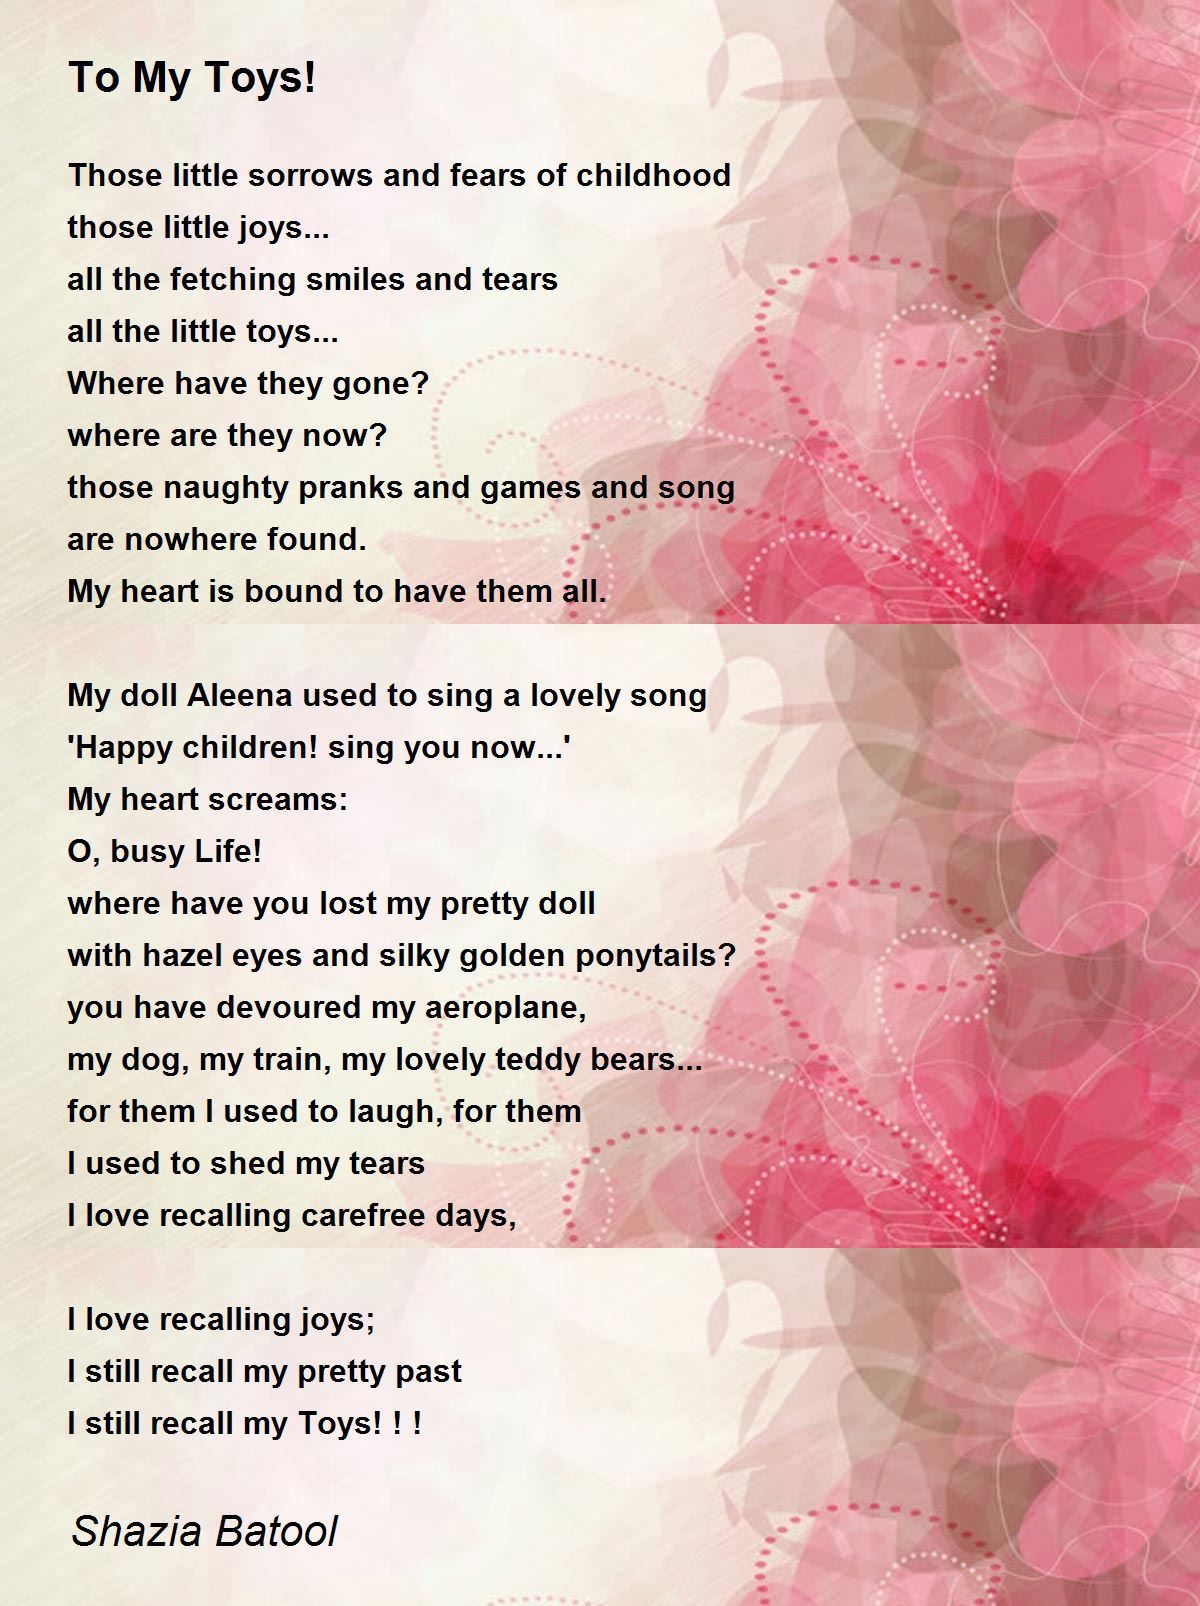 To My Toys! Poem by Shahzia Batool - Poem Hunter